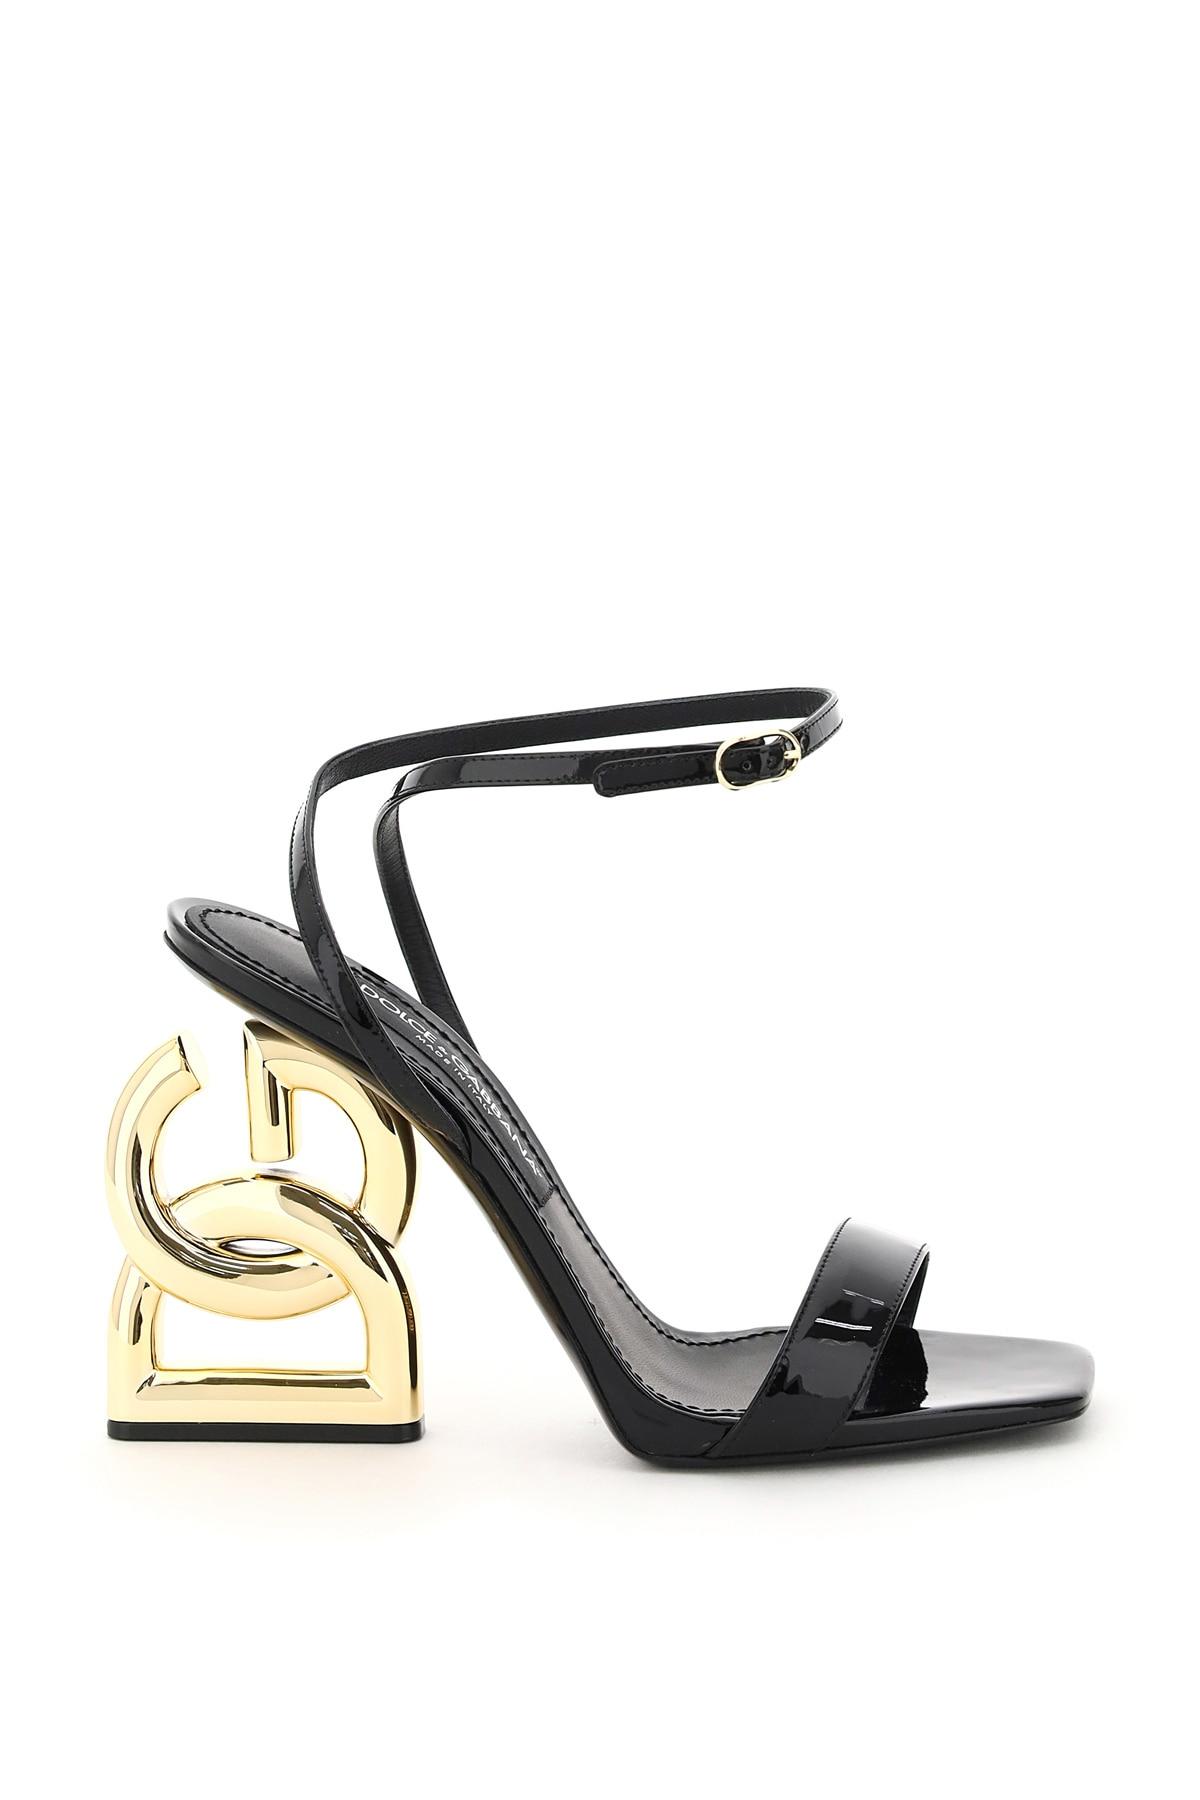 Dolce & Gabbana Kitten Heel Sandals | Mercari